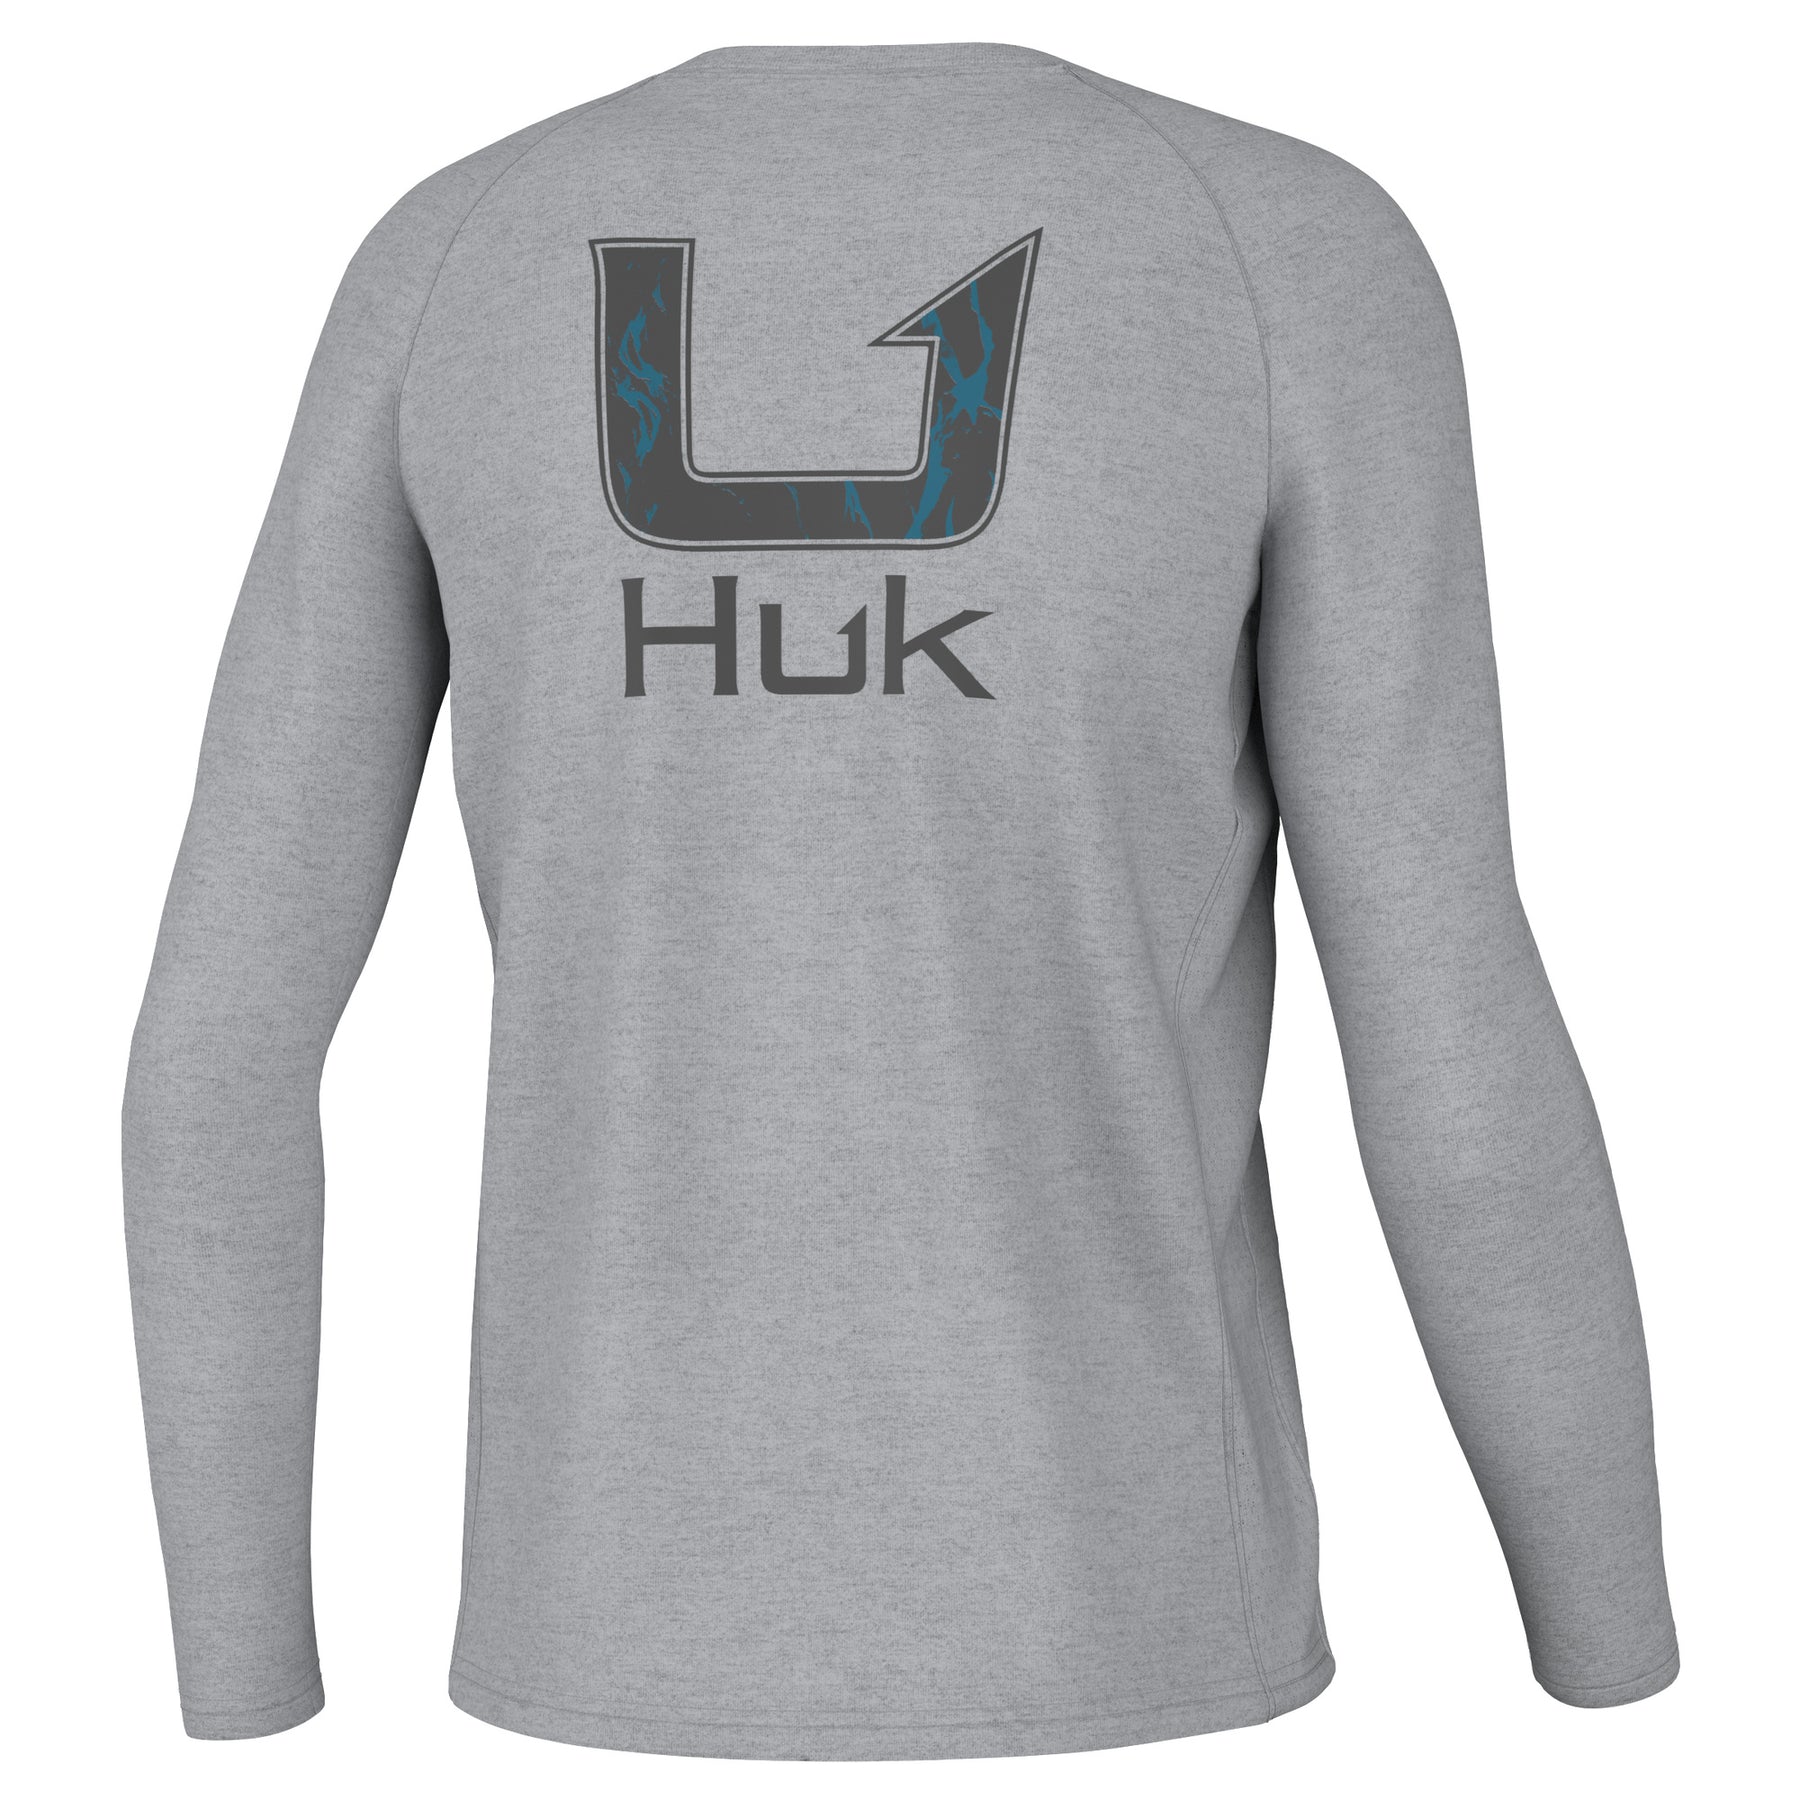 Huk Men's KC Ambush Pursuit Long Sleeve T-Shirt, Medium, Harbor Mist